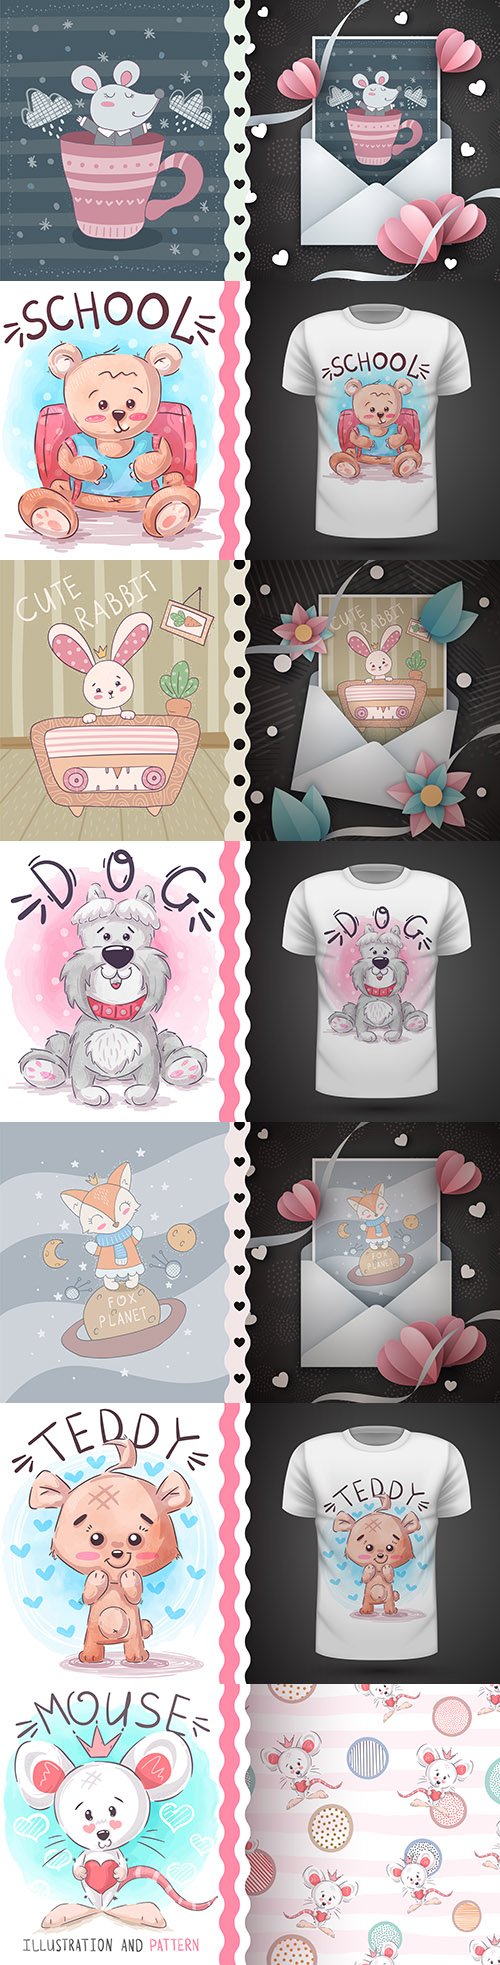 Funny animal cartoon characters design press on t-shirt 7